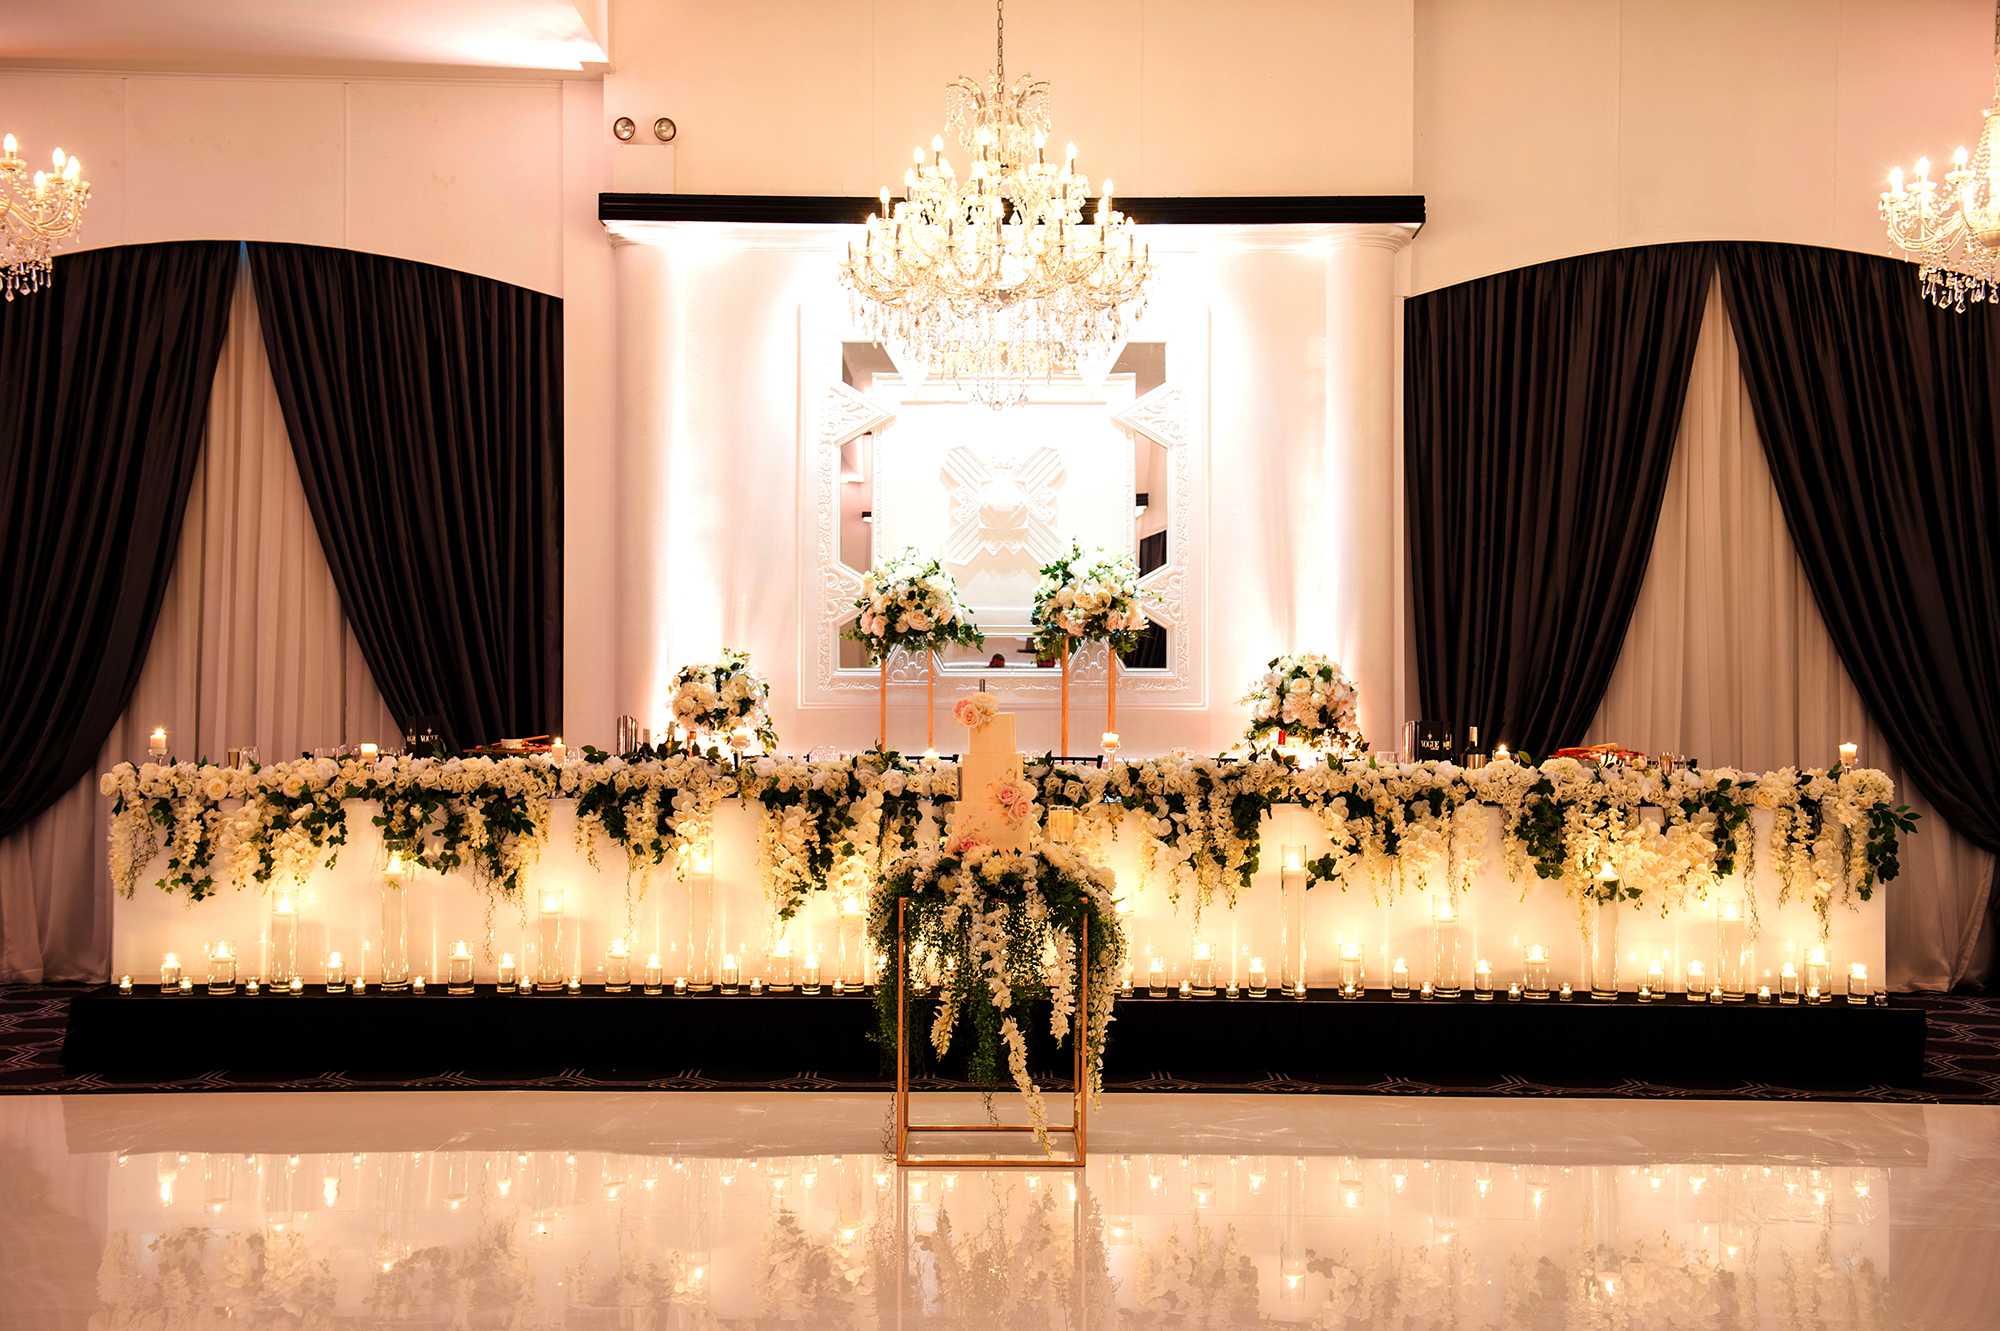 vogue ballroom incredible bridal table